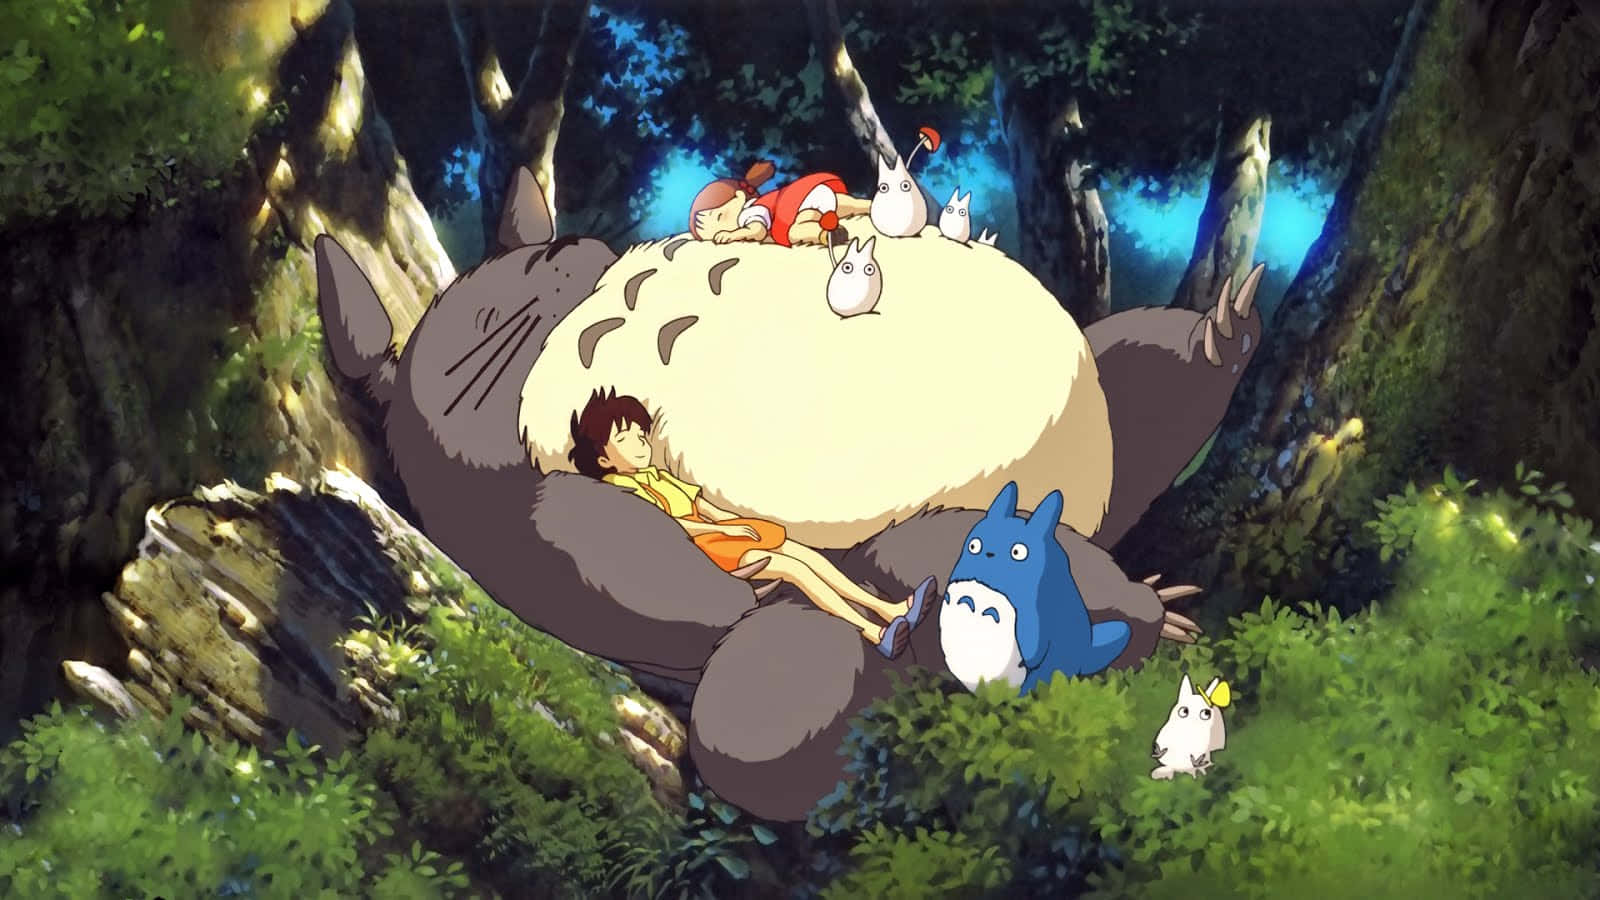 Engrupp Människor Som Sitter På Toppen Av En Gigantisk Totoro